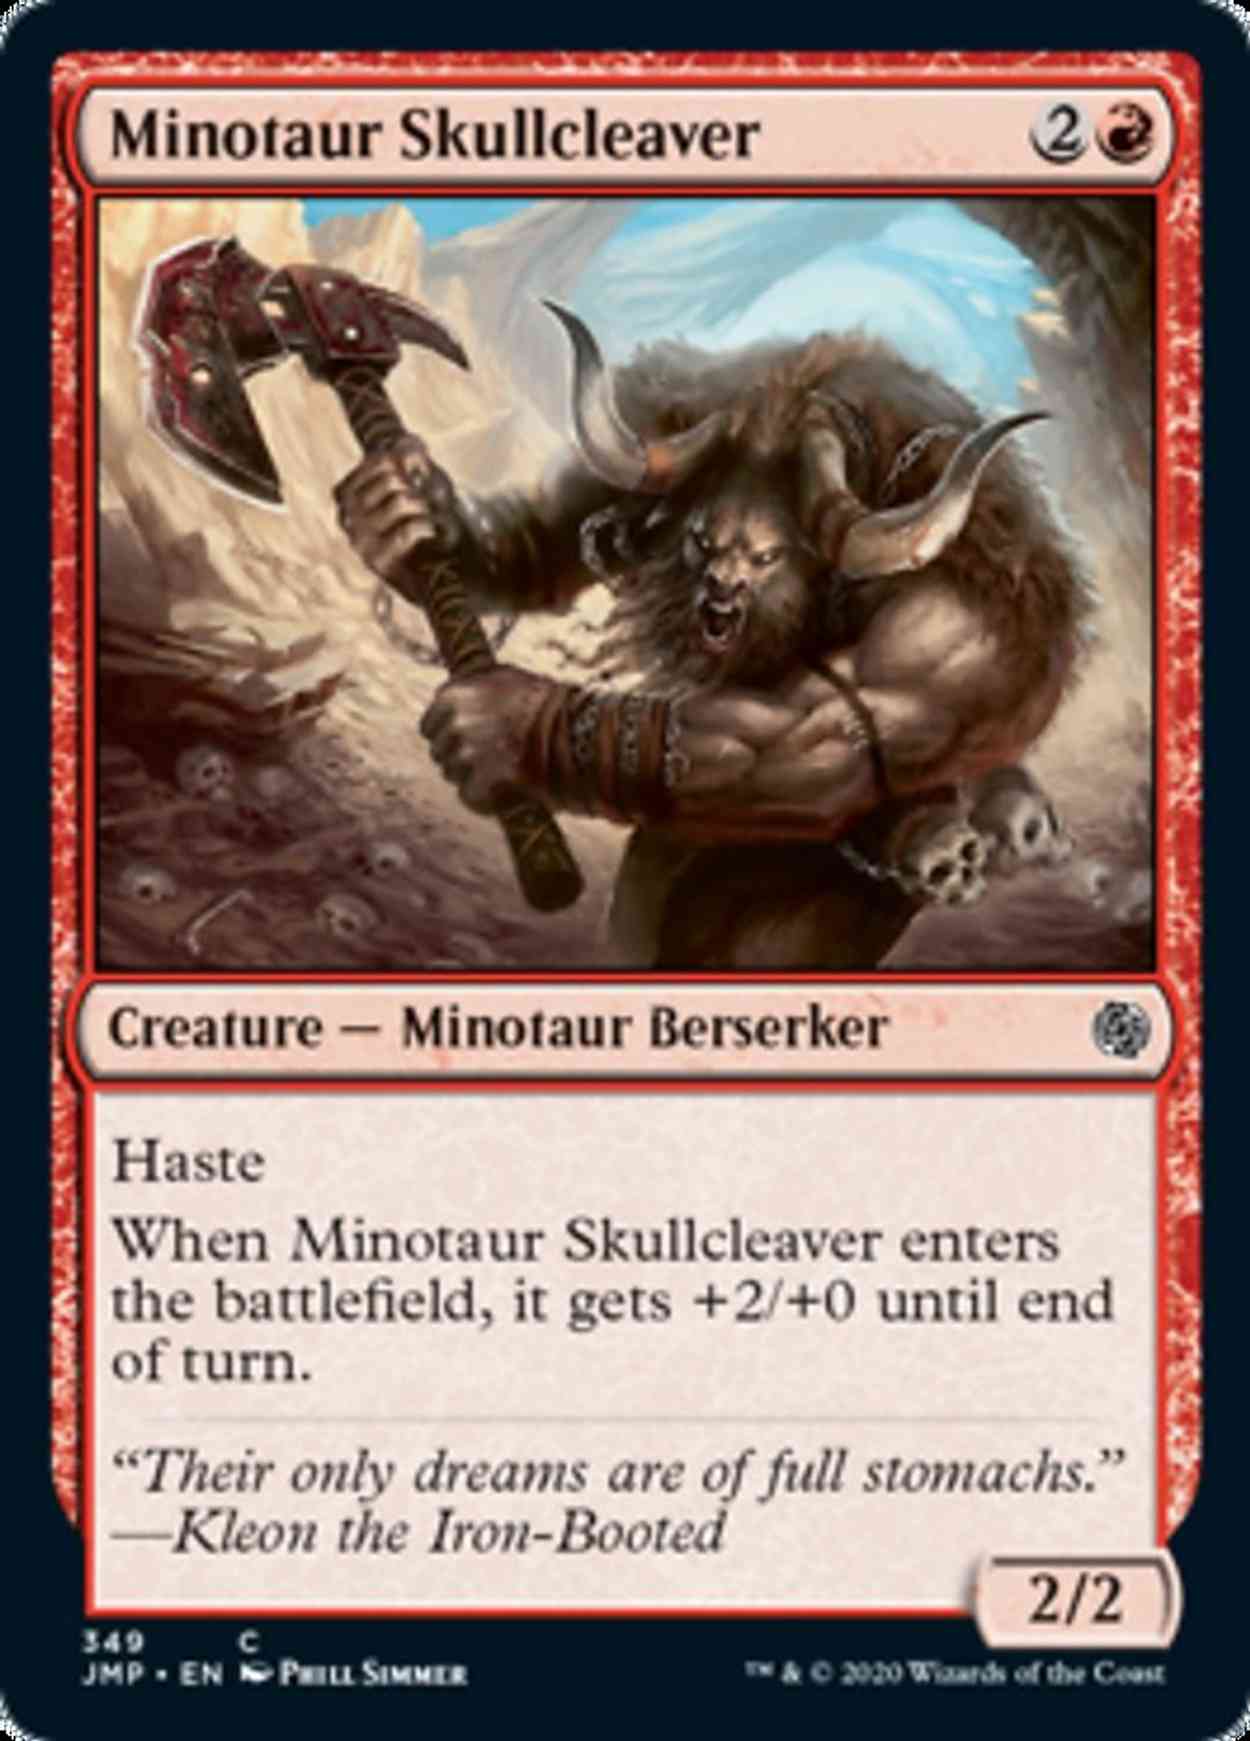 Minotaur Skullcleaver magic card front